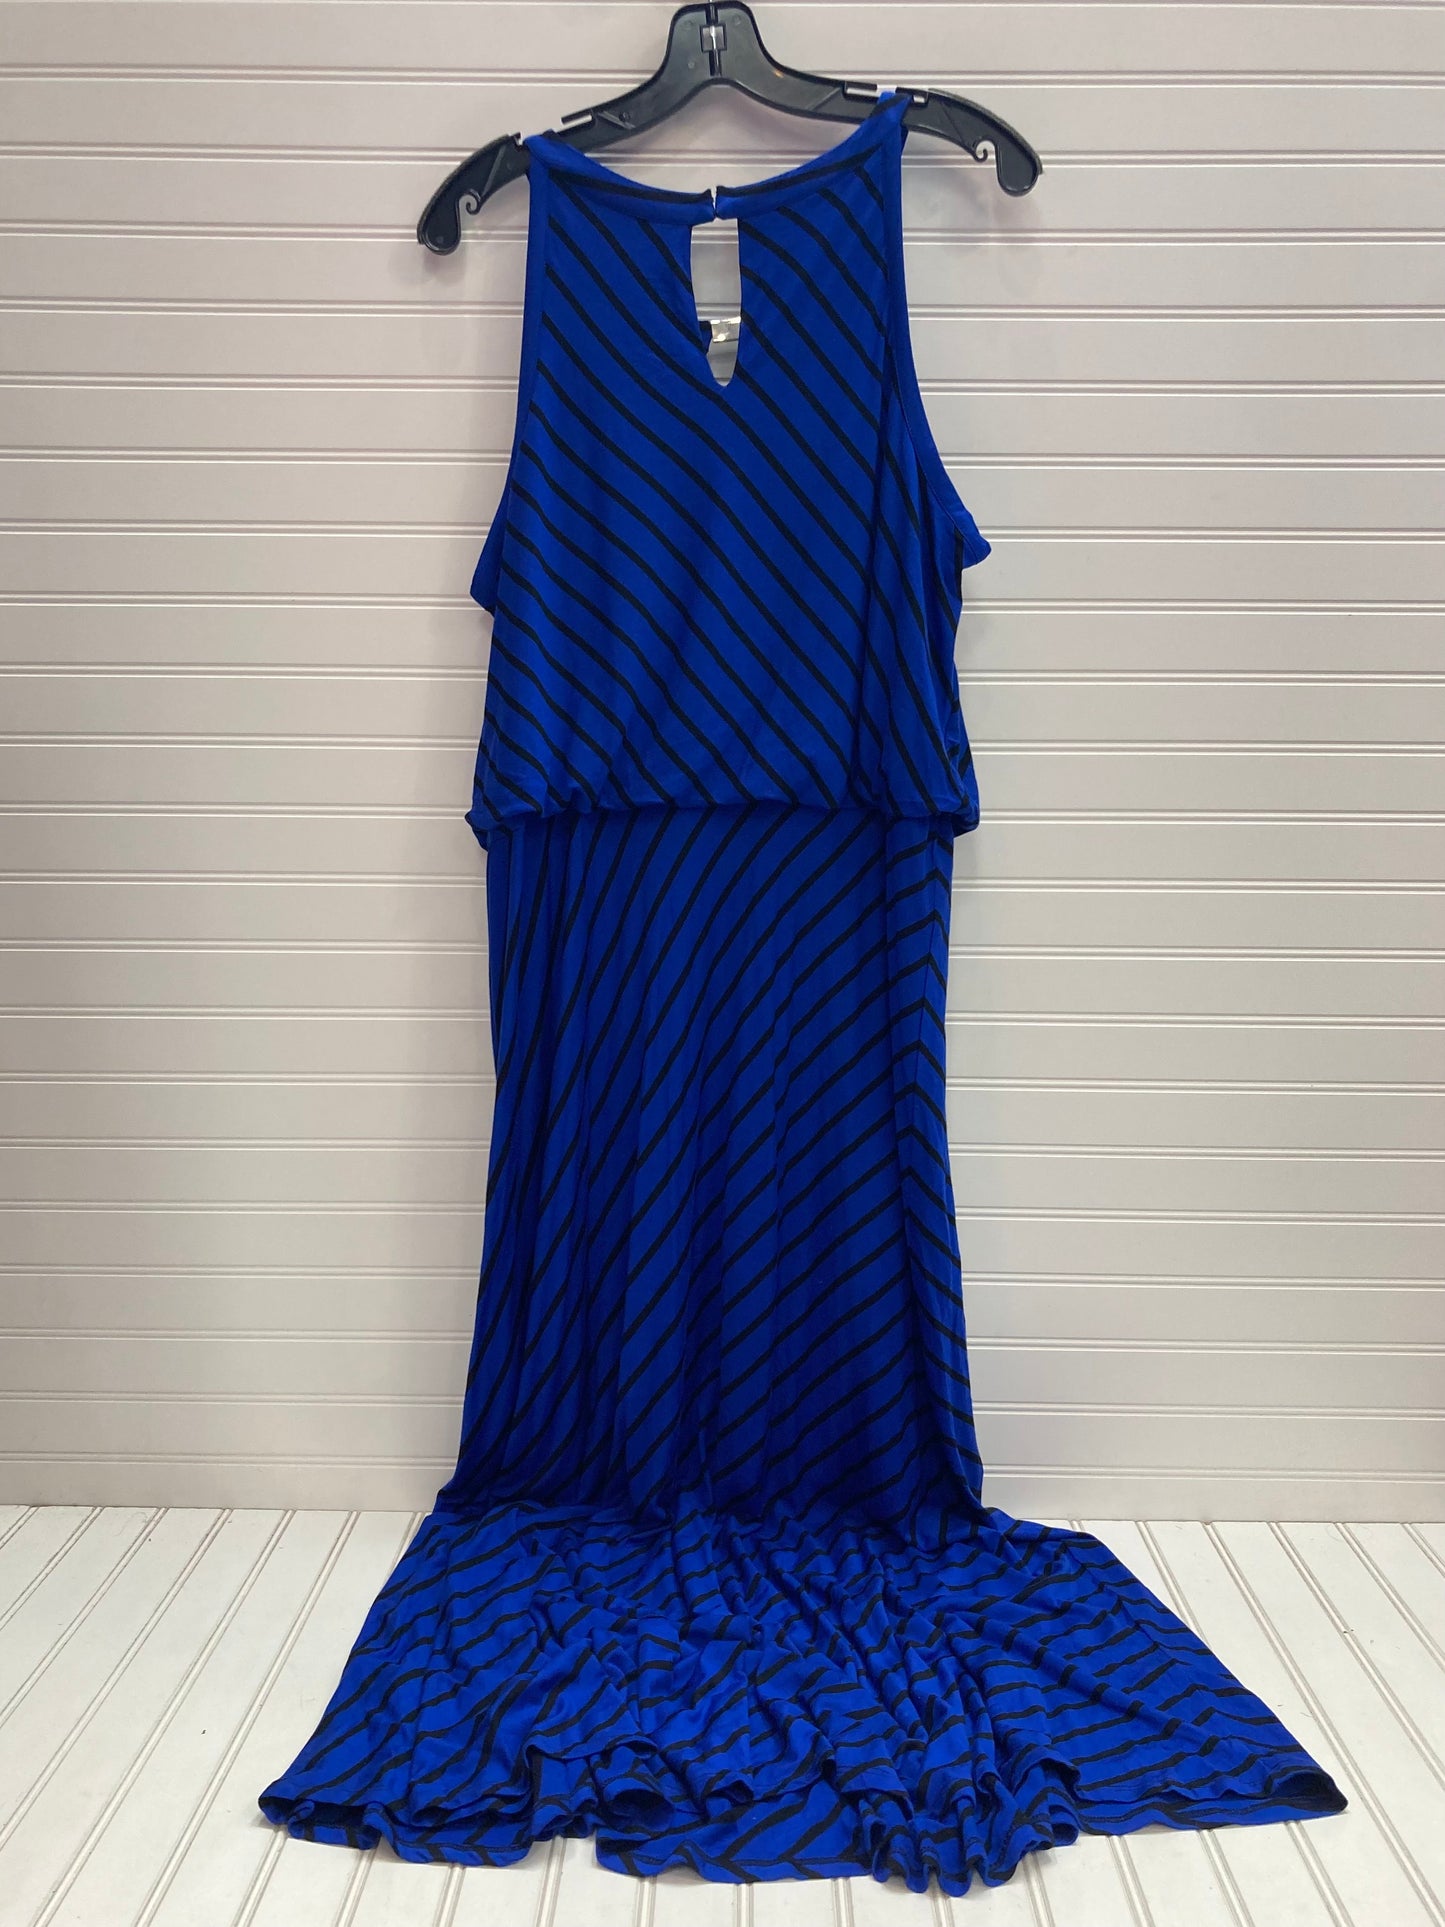 Black & Blue Dress Casual Maxi Calvin Klein, Size 1x